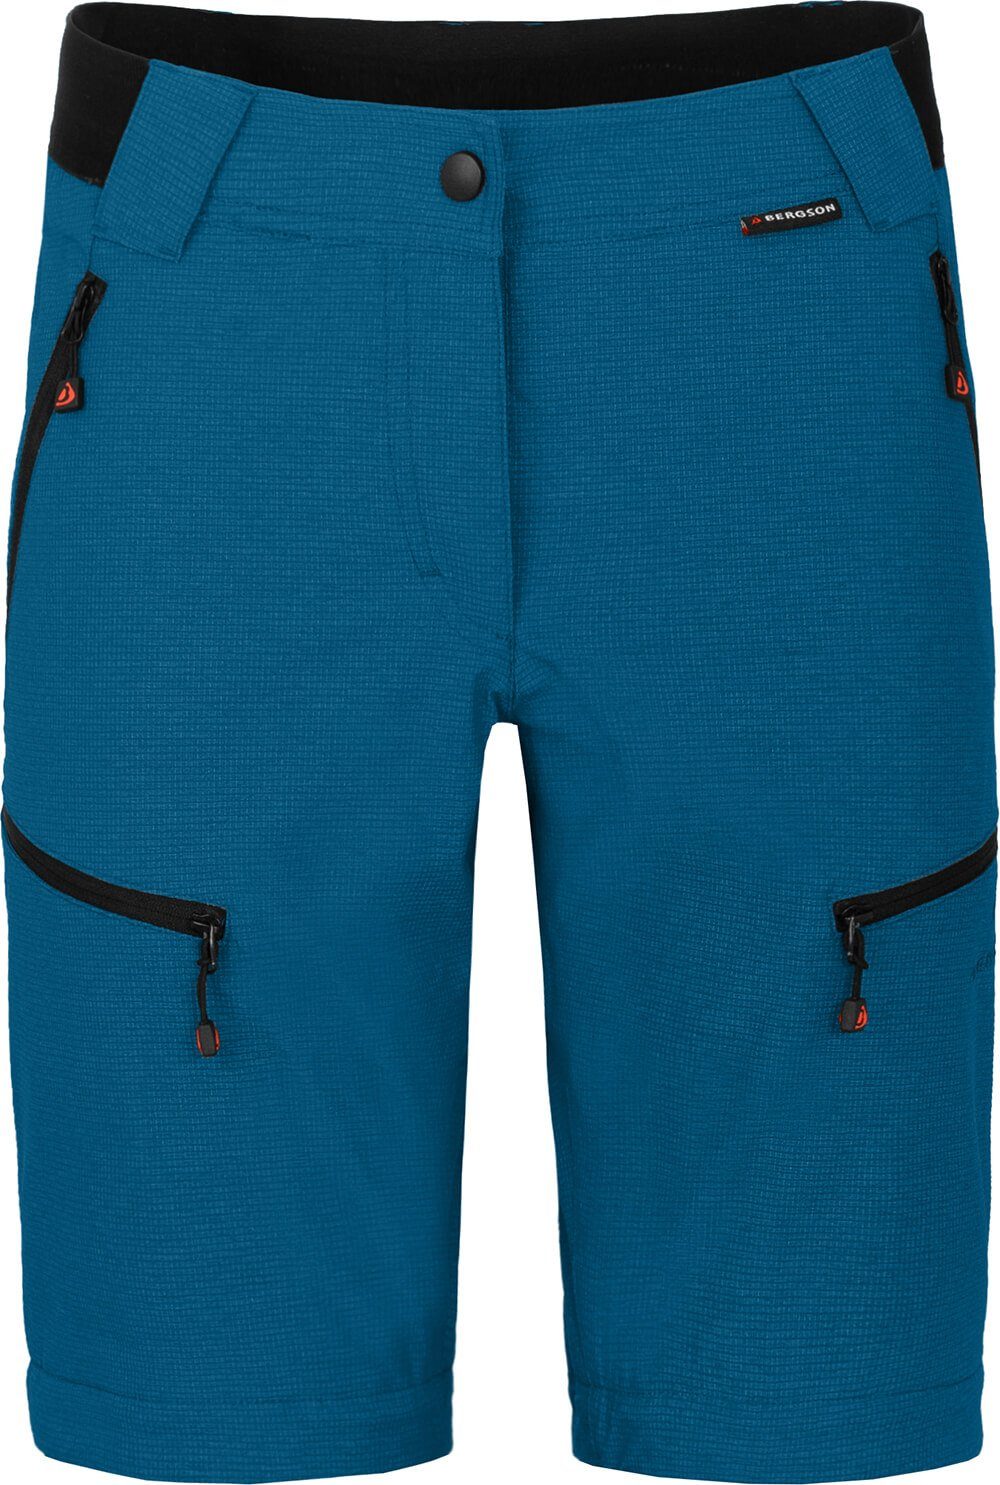 Bergson Zip-off-Hose PORI Zipp-Off Wanderhose, Damen robust, Saphir elastisch, Normalgrößen, blau